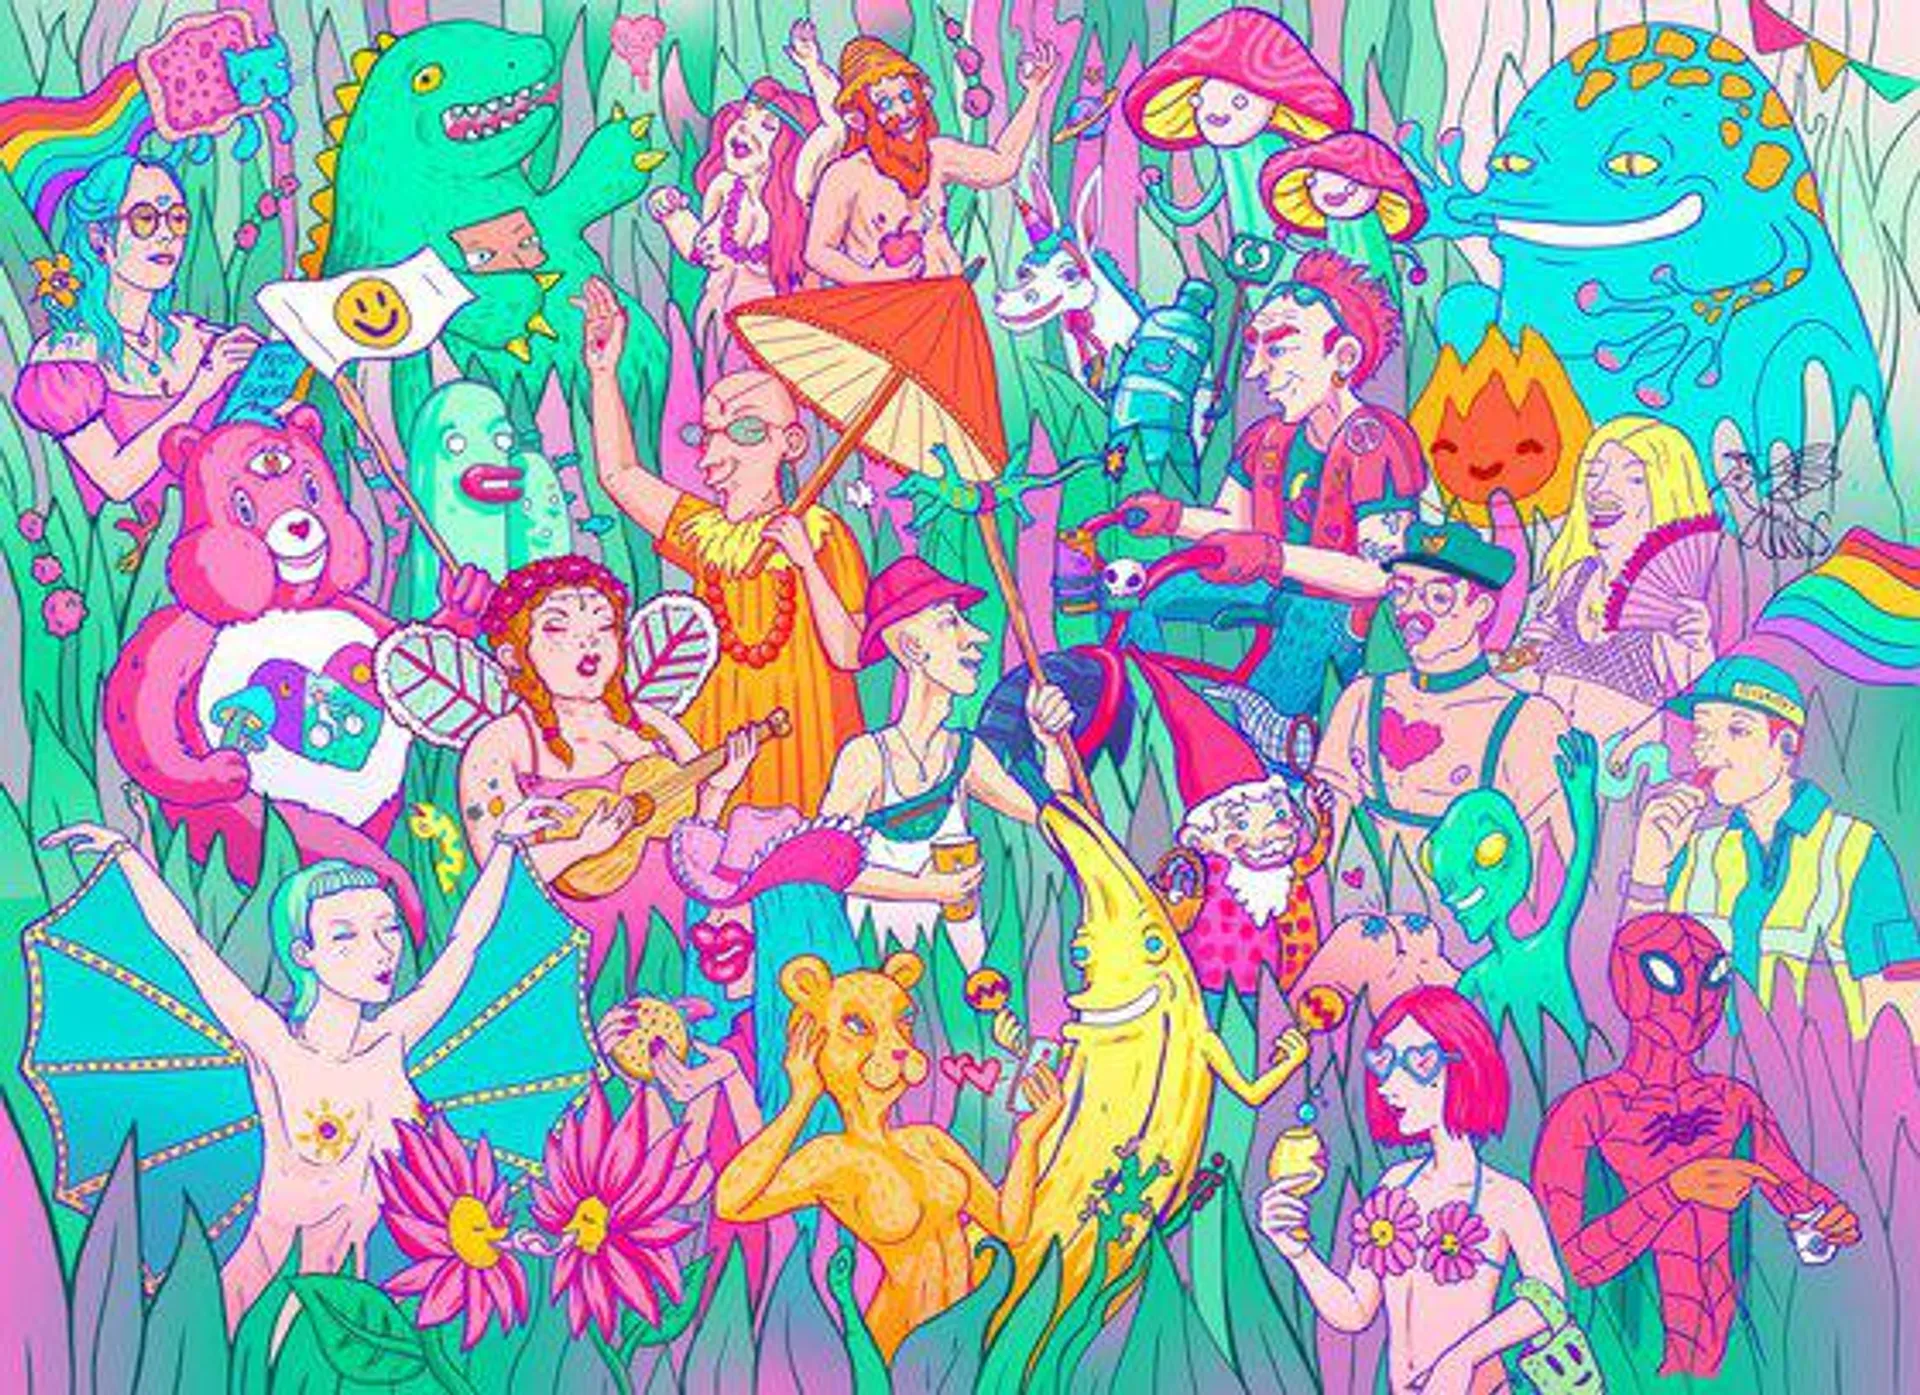 Festival Lovers Pop Surrealism Lowbrow Cartoon Art Limited Edition Print by Zubieta A2 (2022)